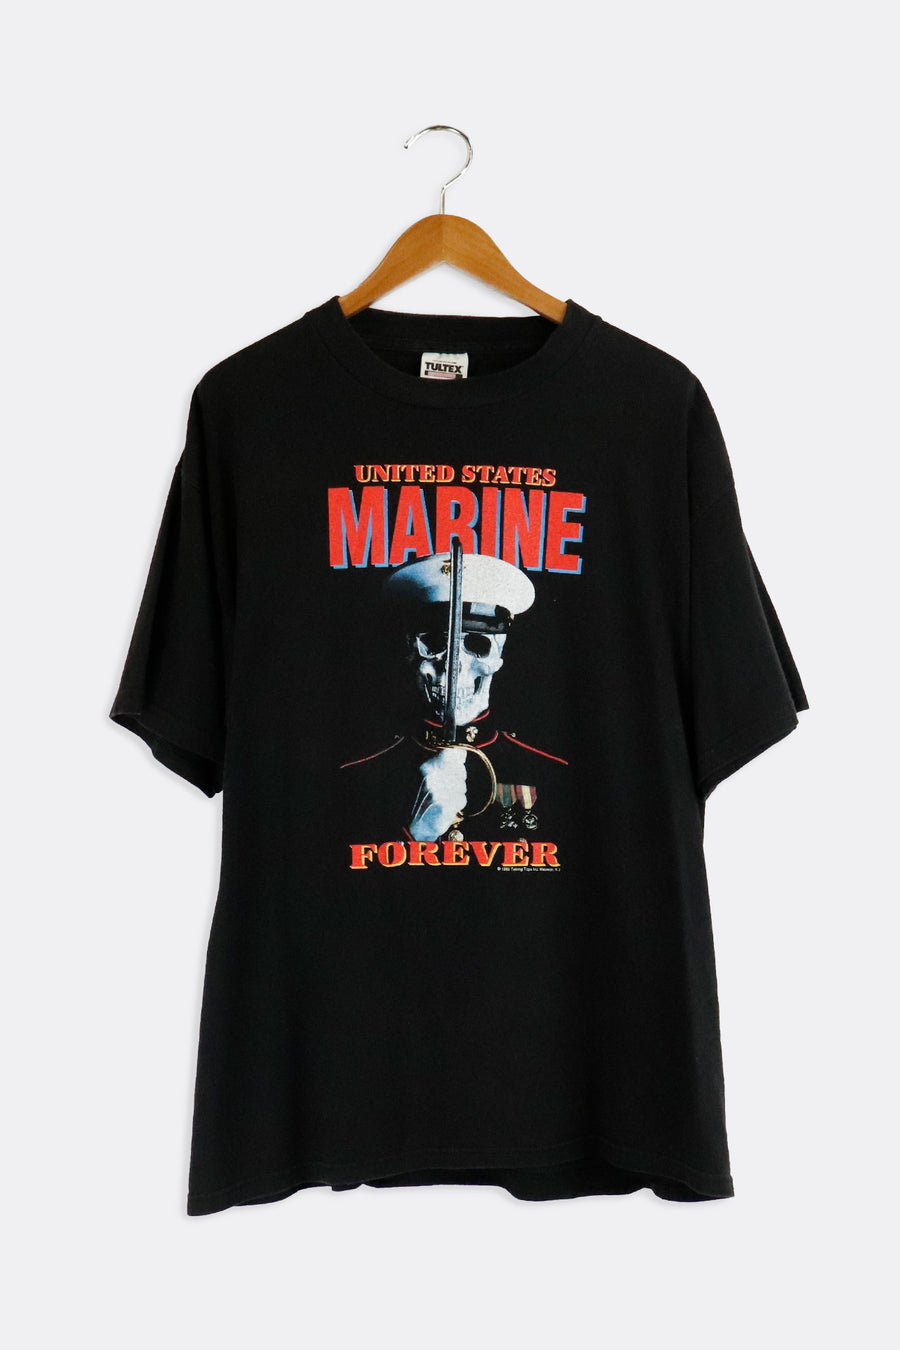 Vintage 1995 United States Marine Forever Graphic T Shirt Sz XL